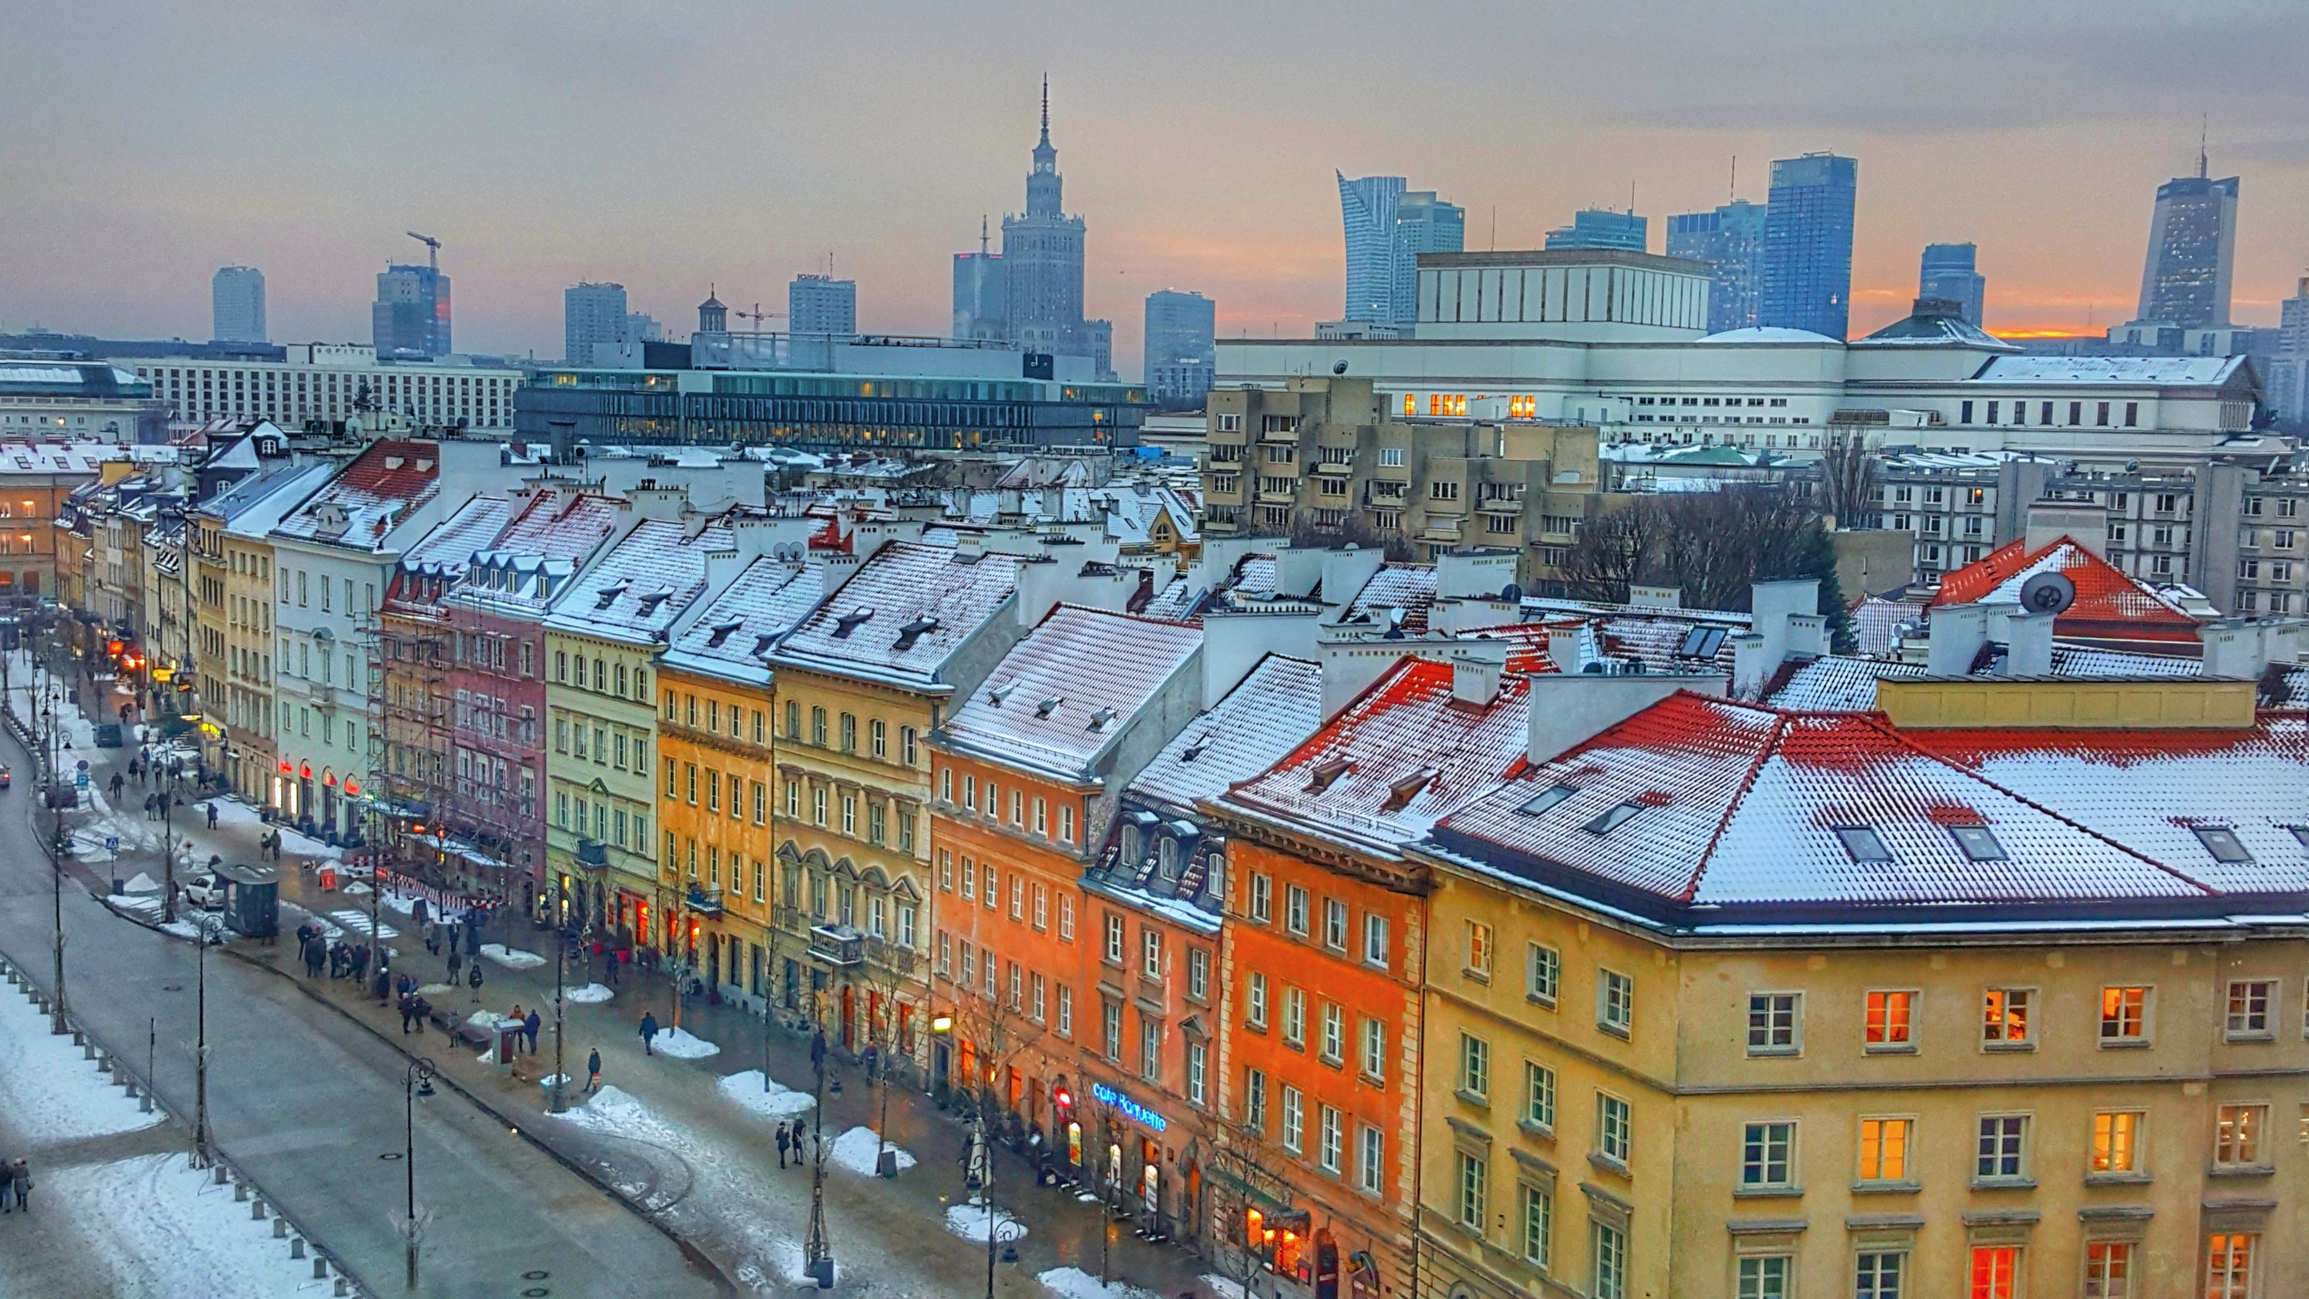 It’s Snowing in Warsaw!